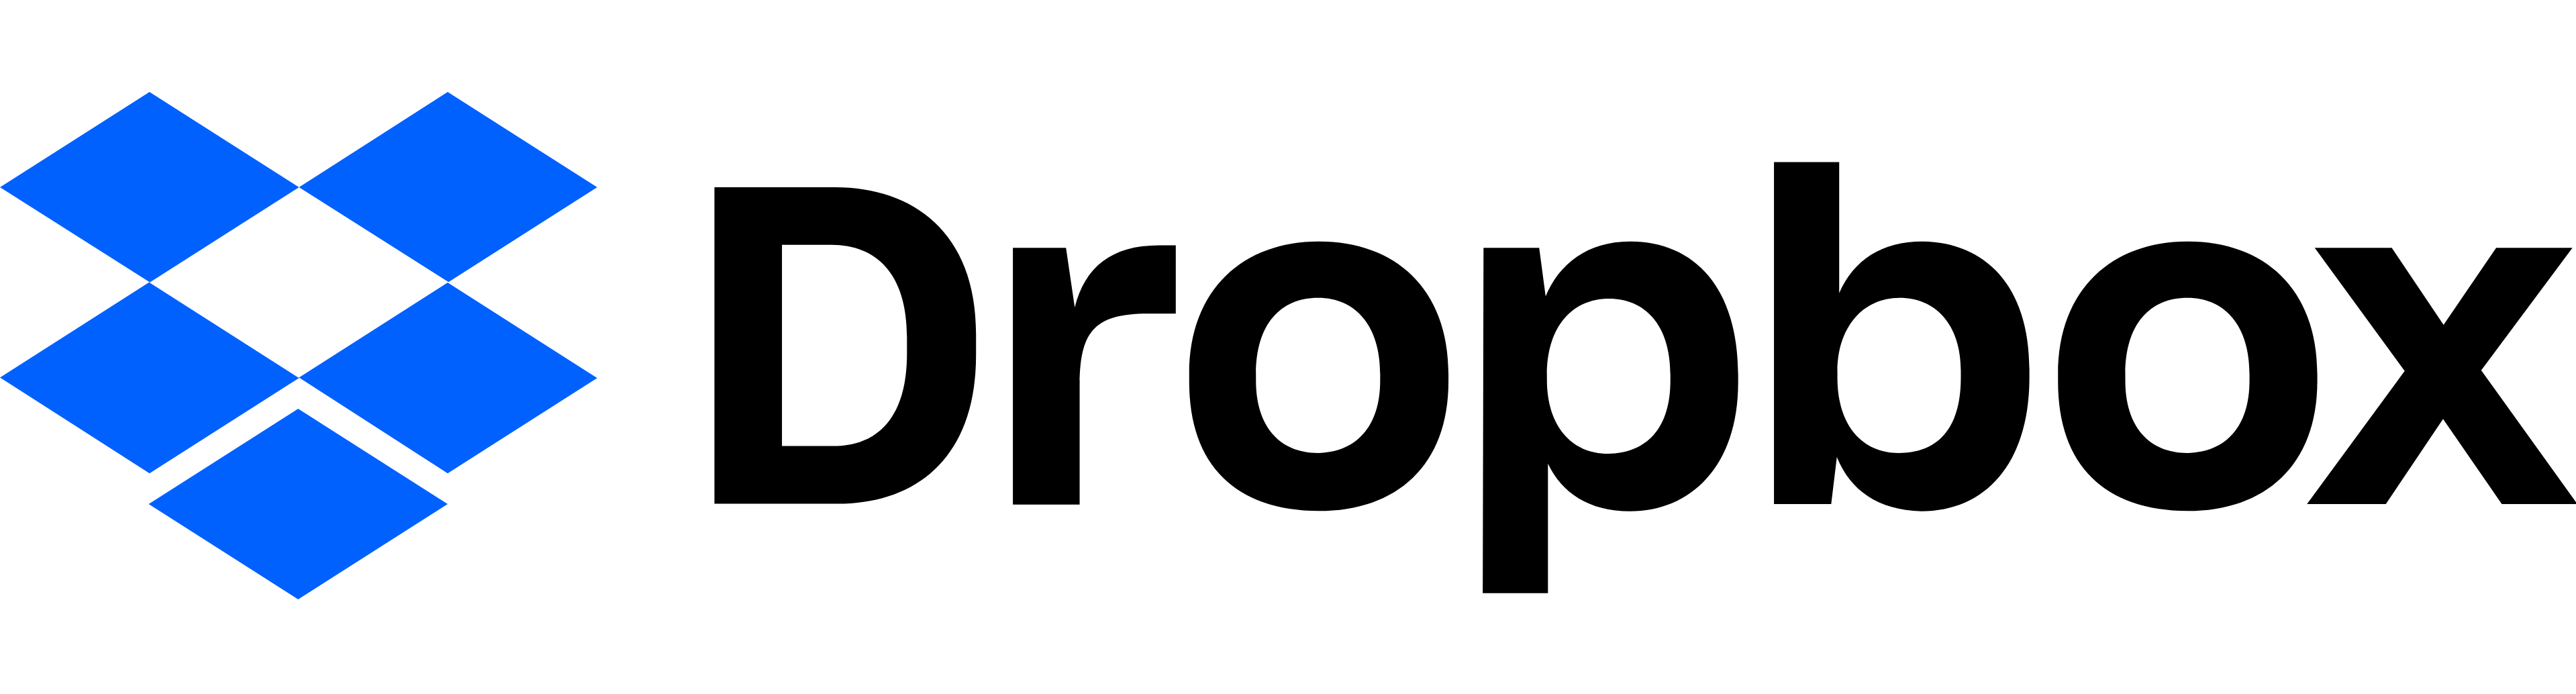 free file uploader - Dropbox